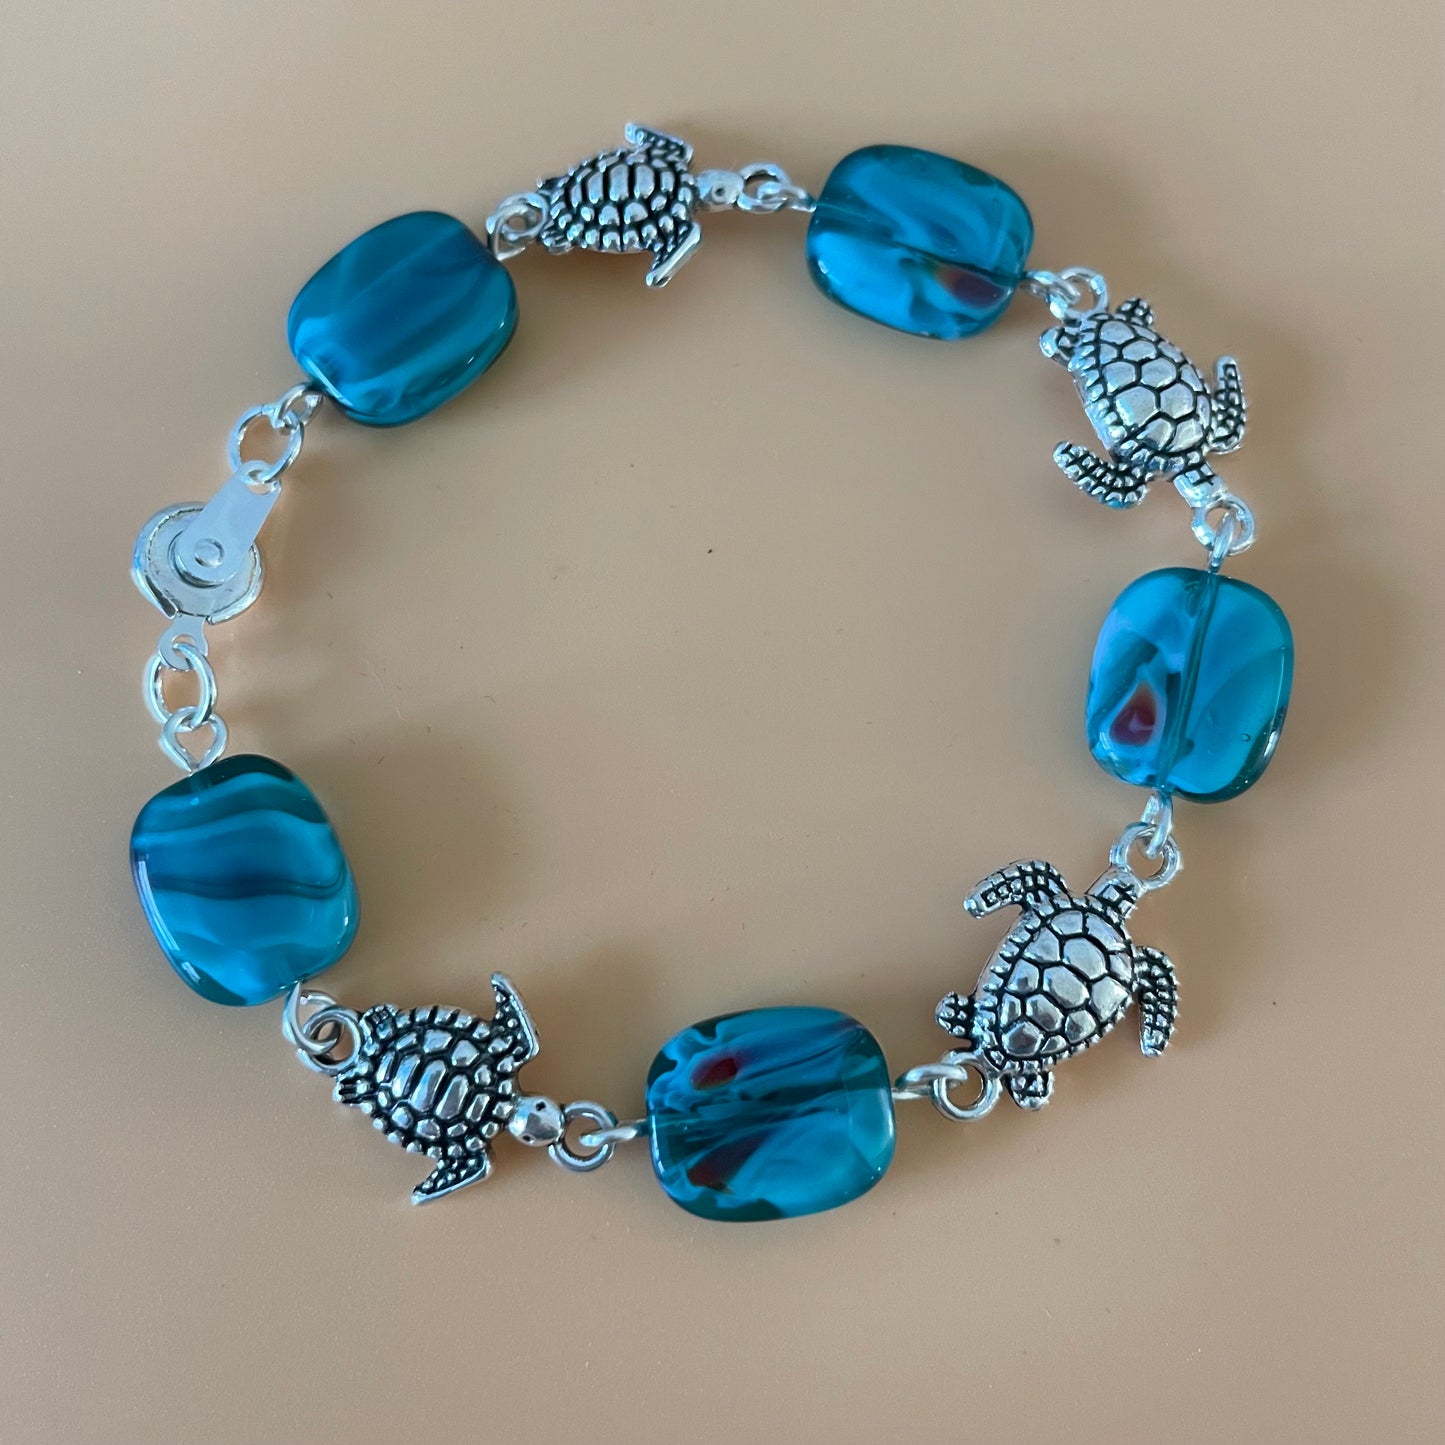 Handmade Smoky Glass & Turtle Bracelet 7.5" Blue Green White Swirl Texture Chunky Metal